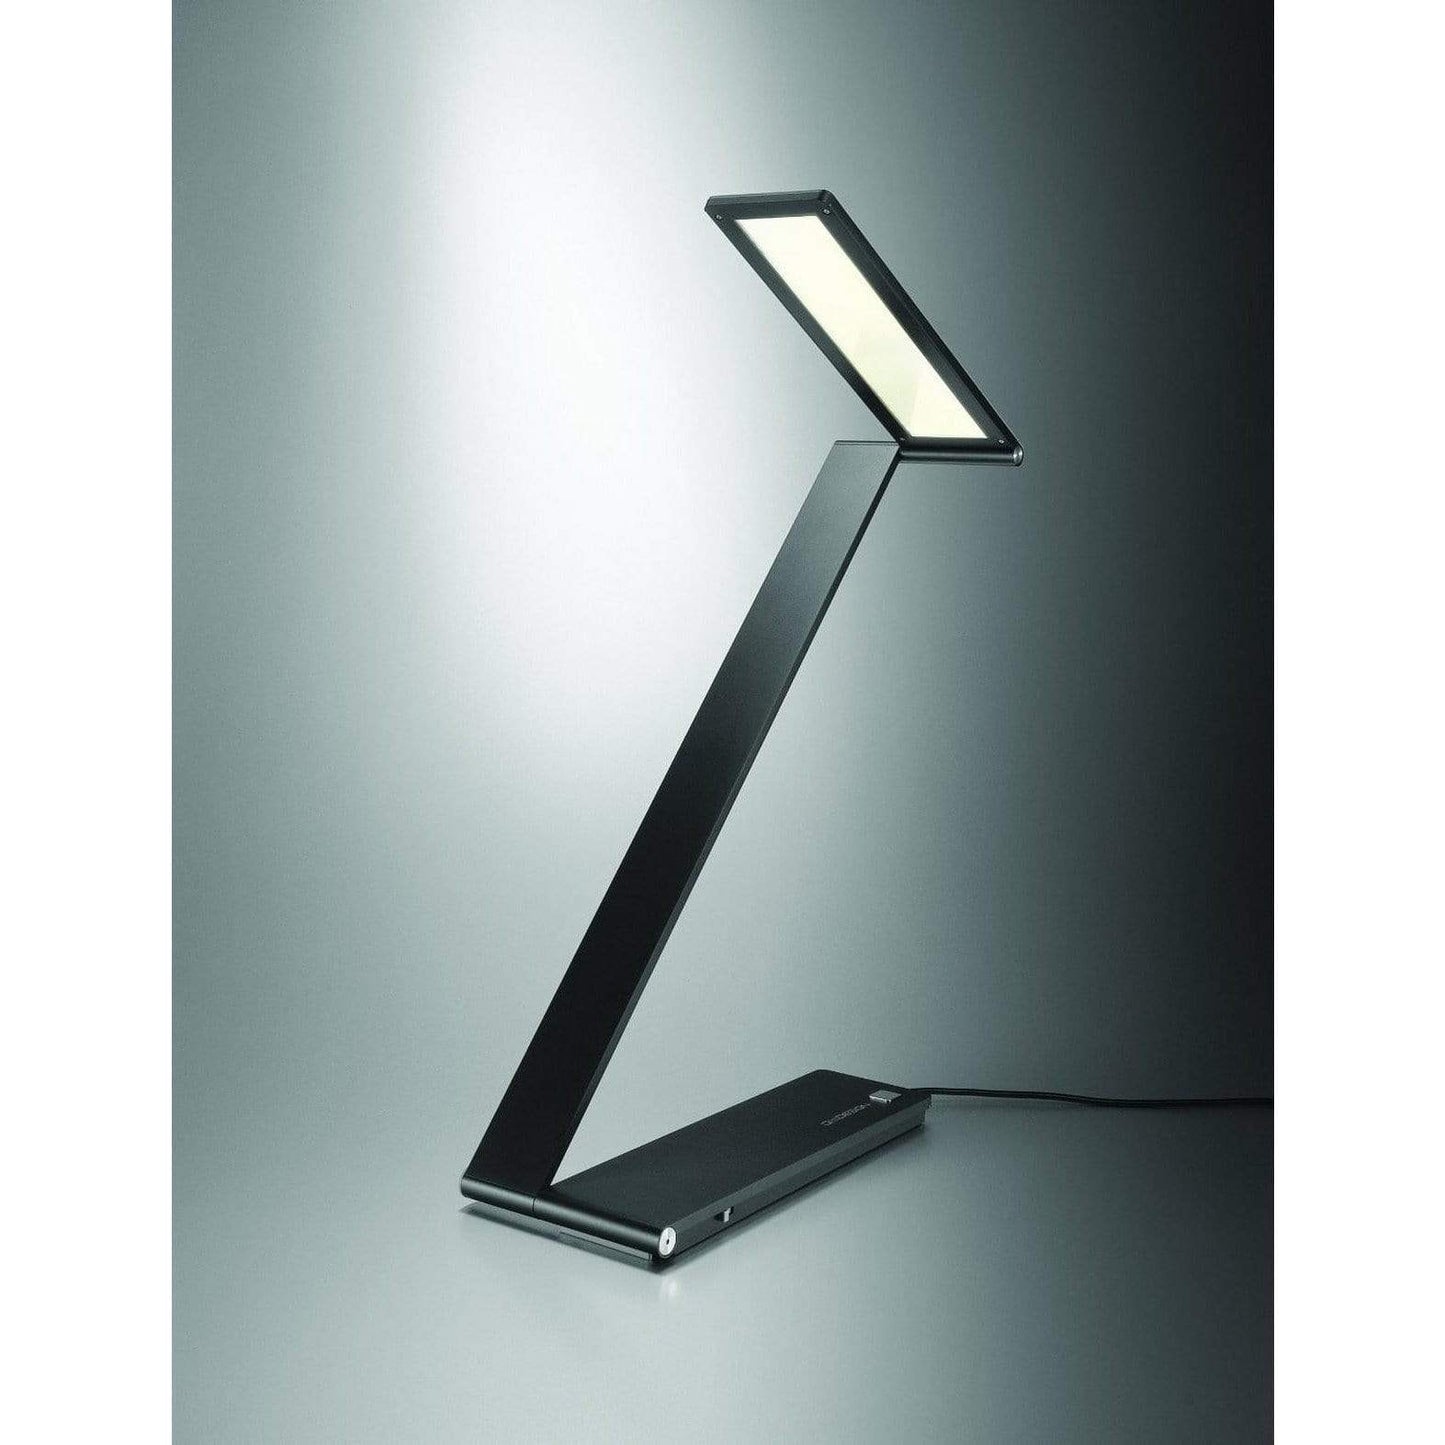 QISDESIGN BE LIGHT BLACK/SILVER TABLE LAMP - DELIGHT OptoElectronics Pte. Ltd